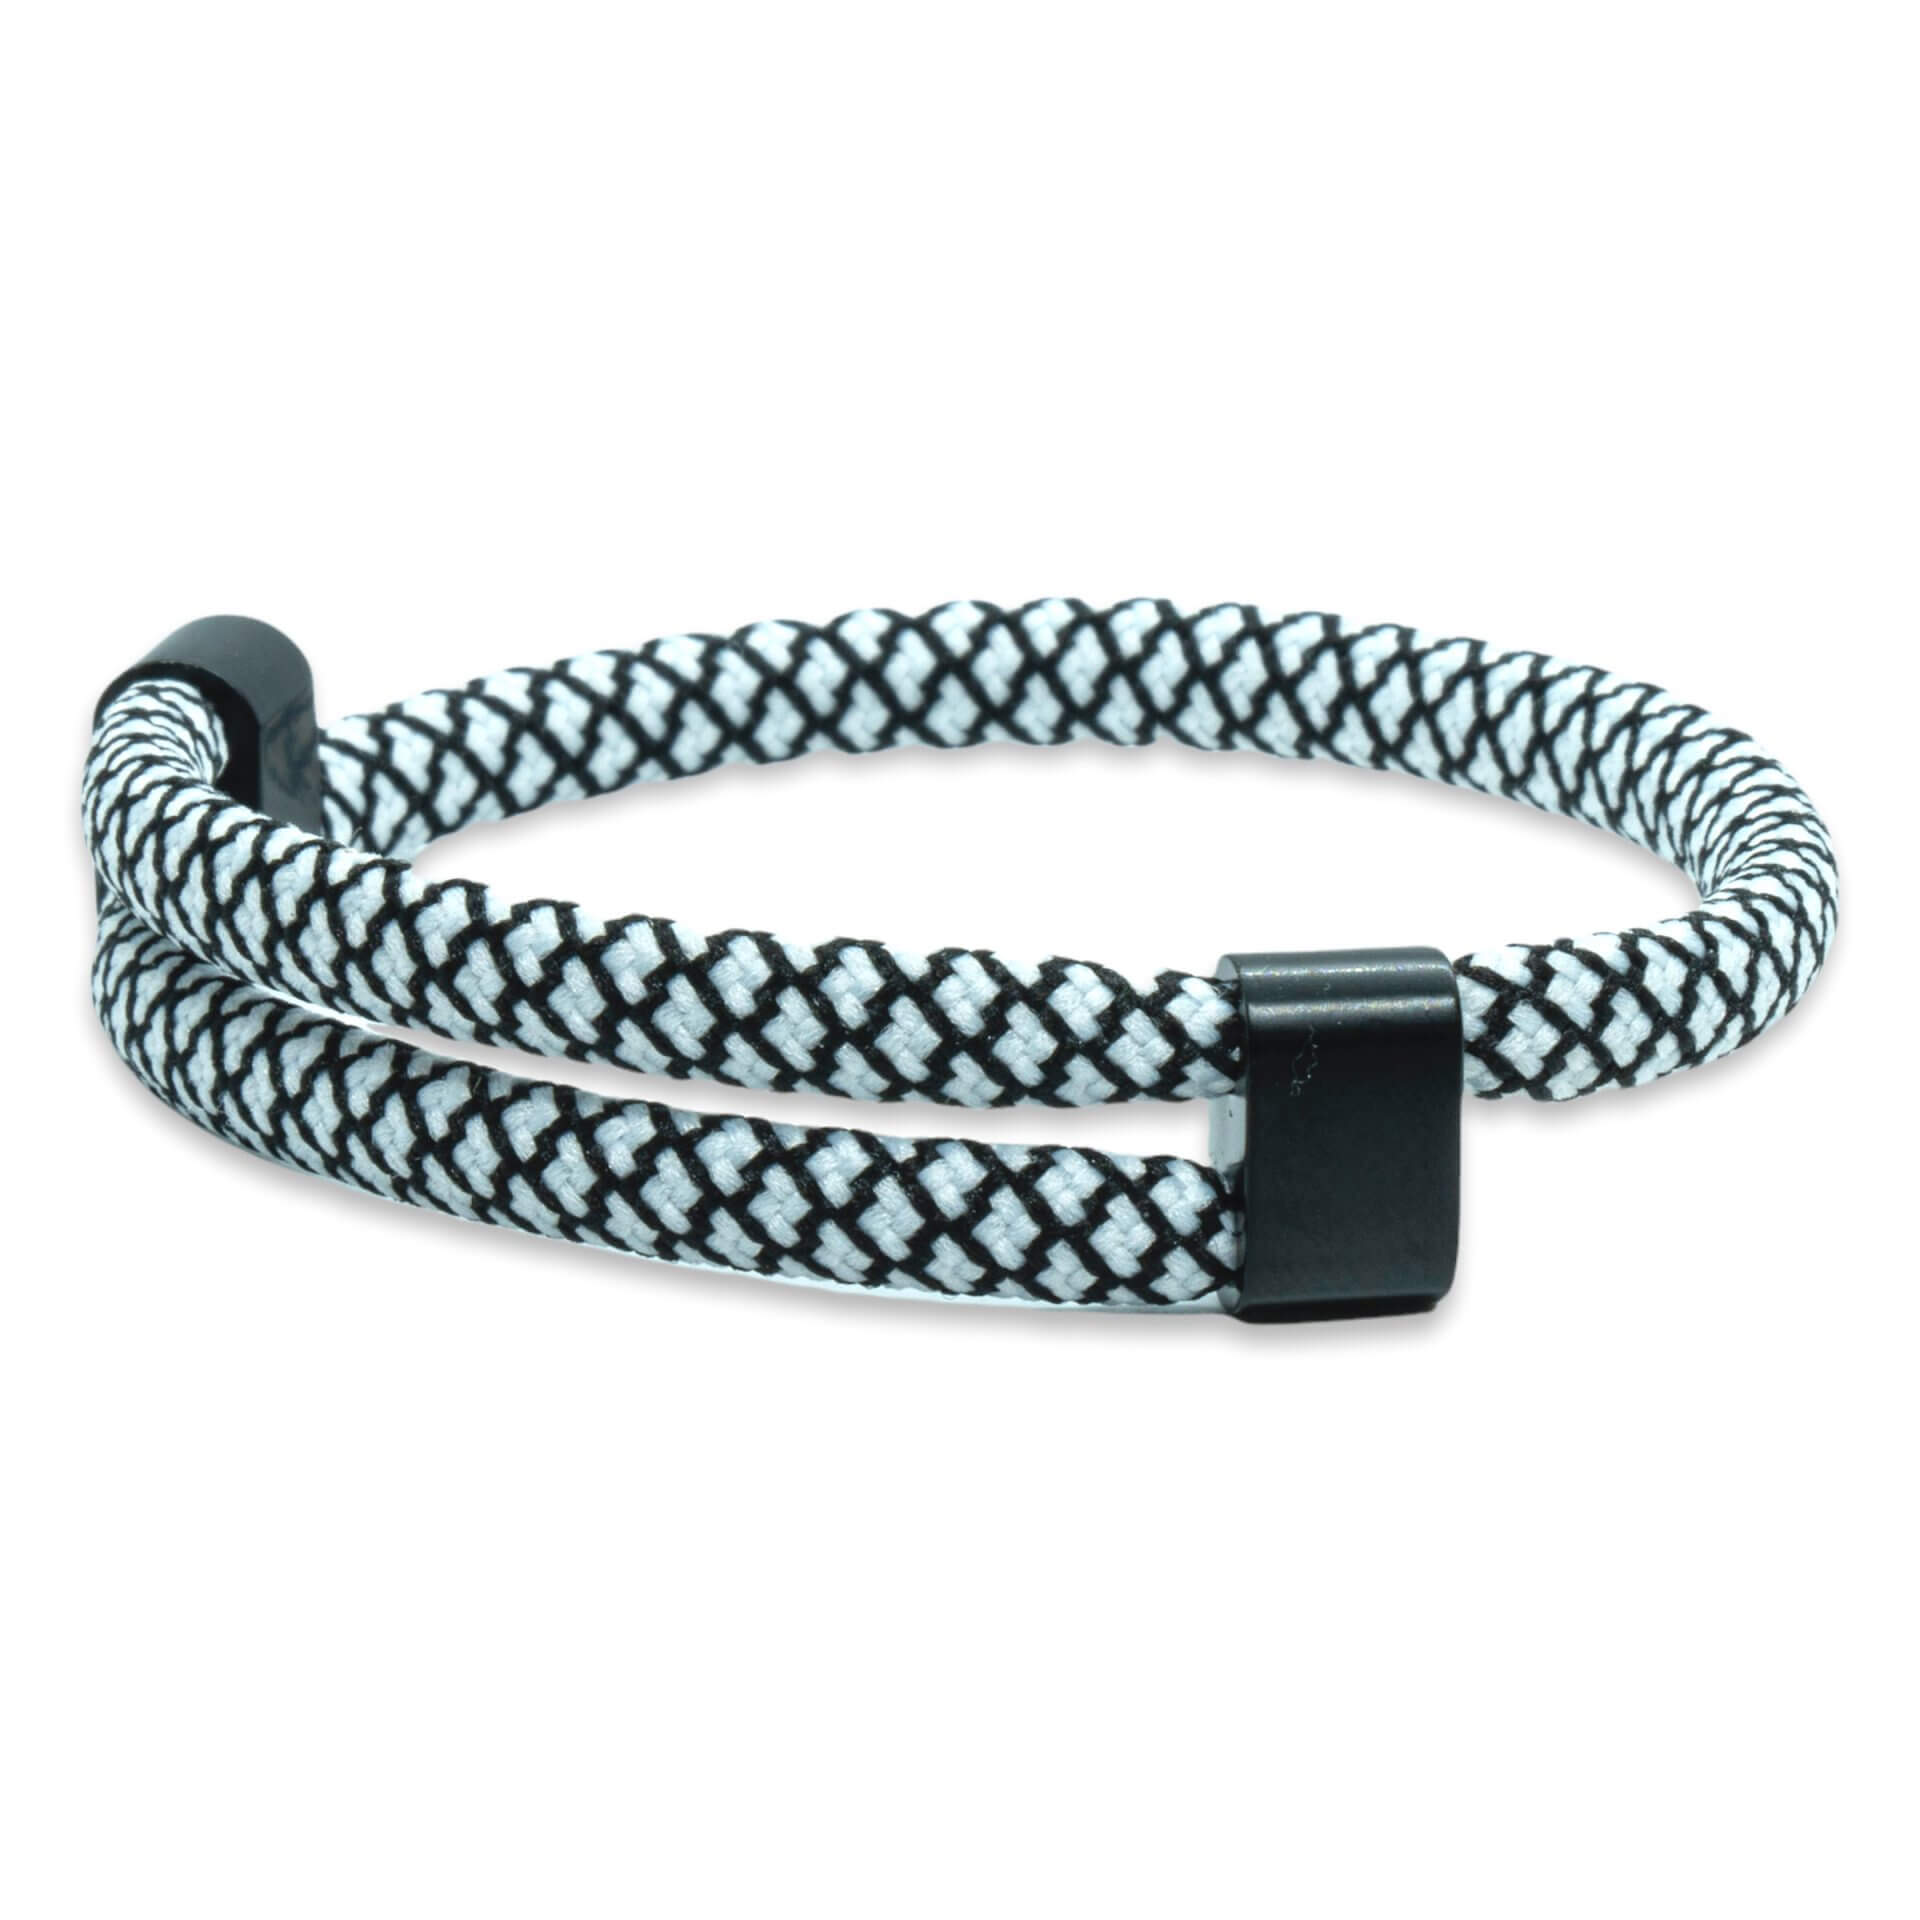 Adjustable rope - White / black